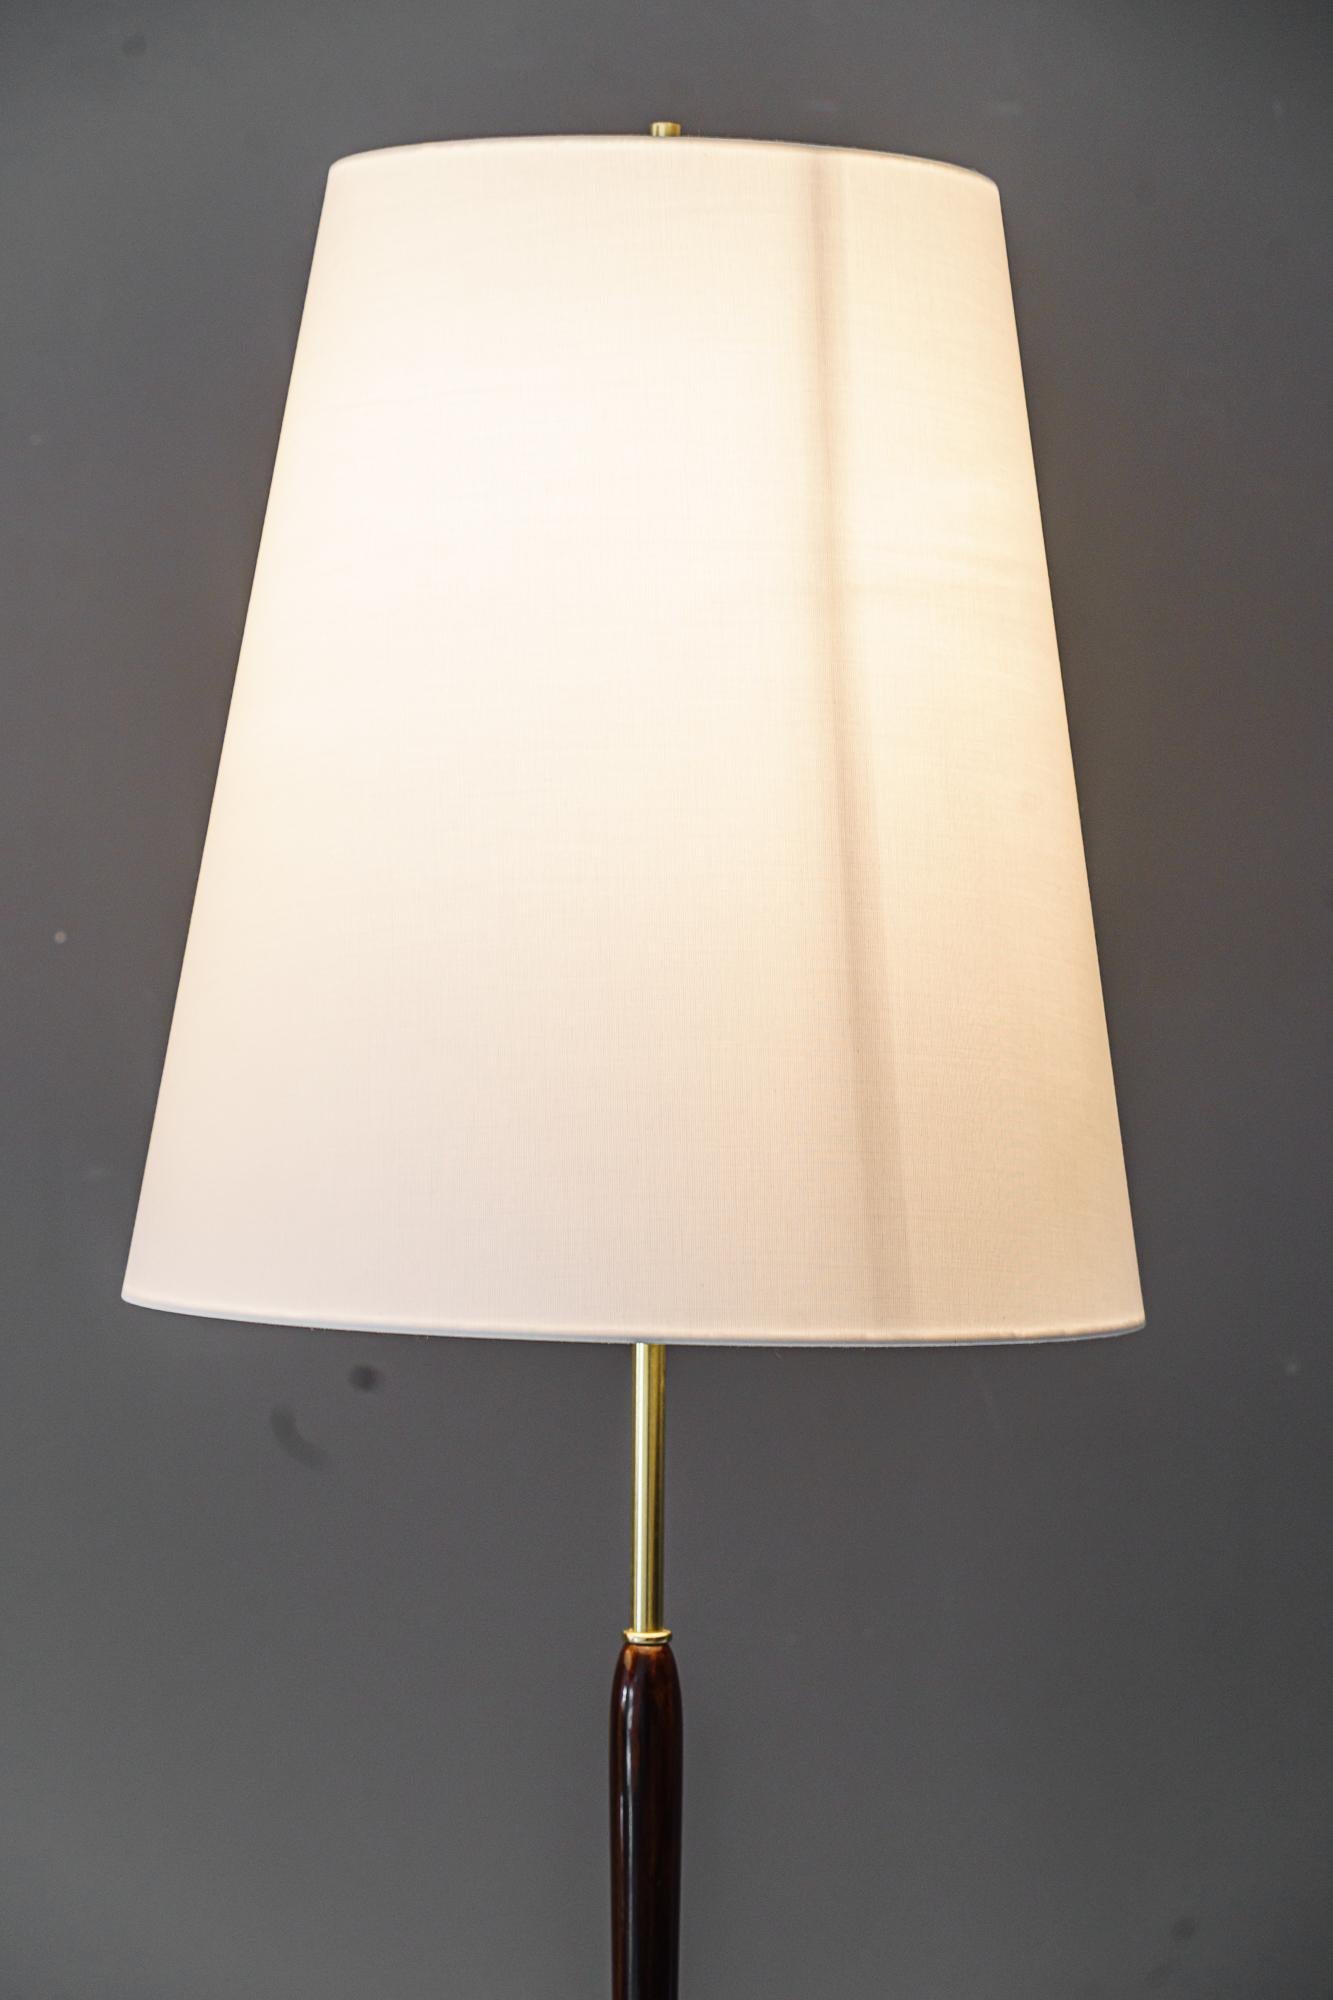 2 Rupert Nikoll Floor Lamps 'Almost Same' Vienna Around 1960 For Sale 2